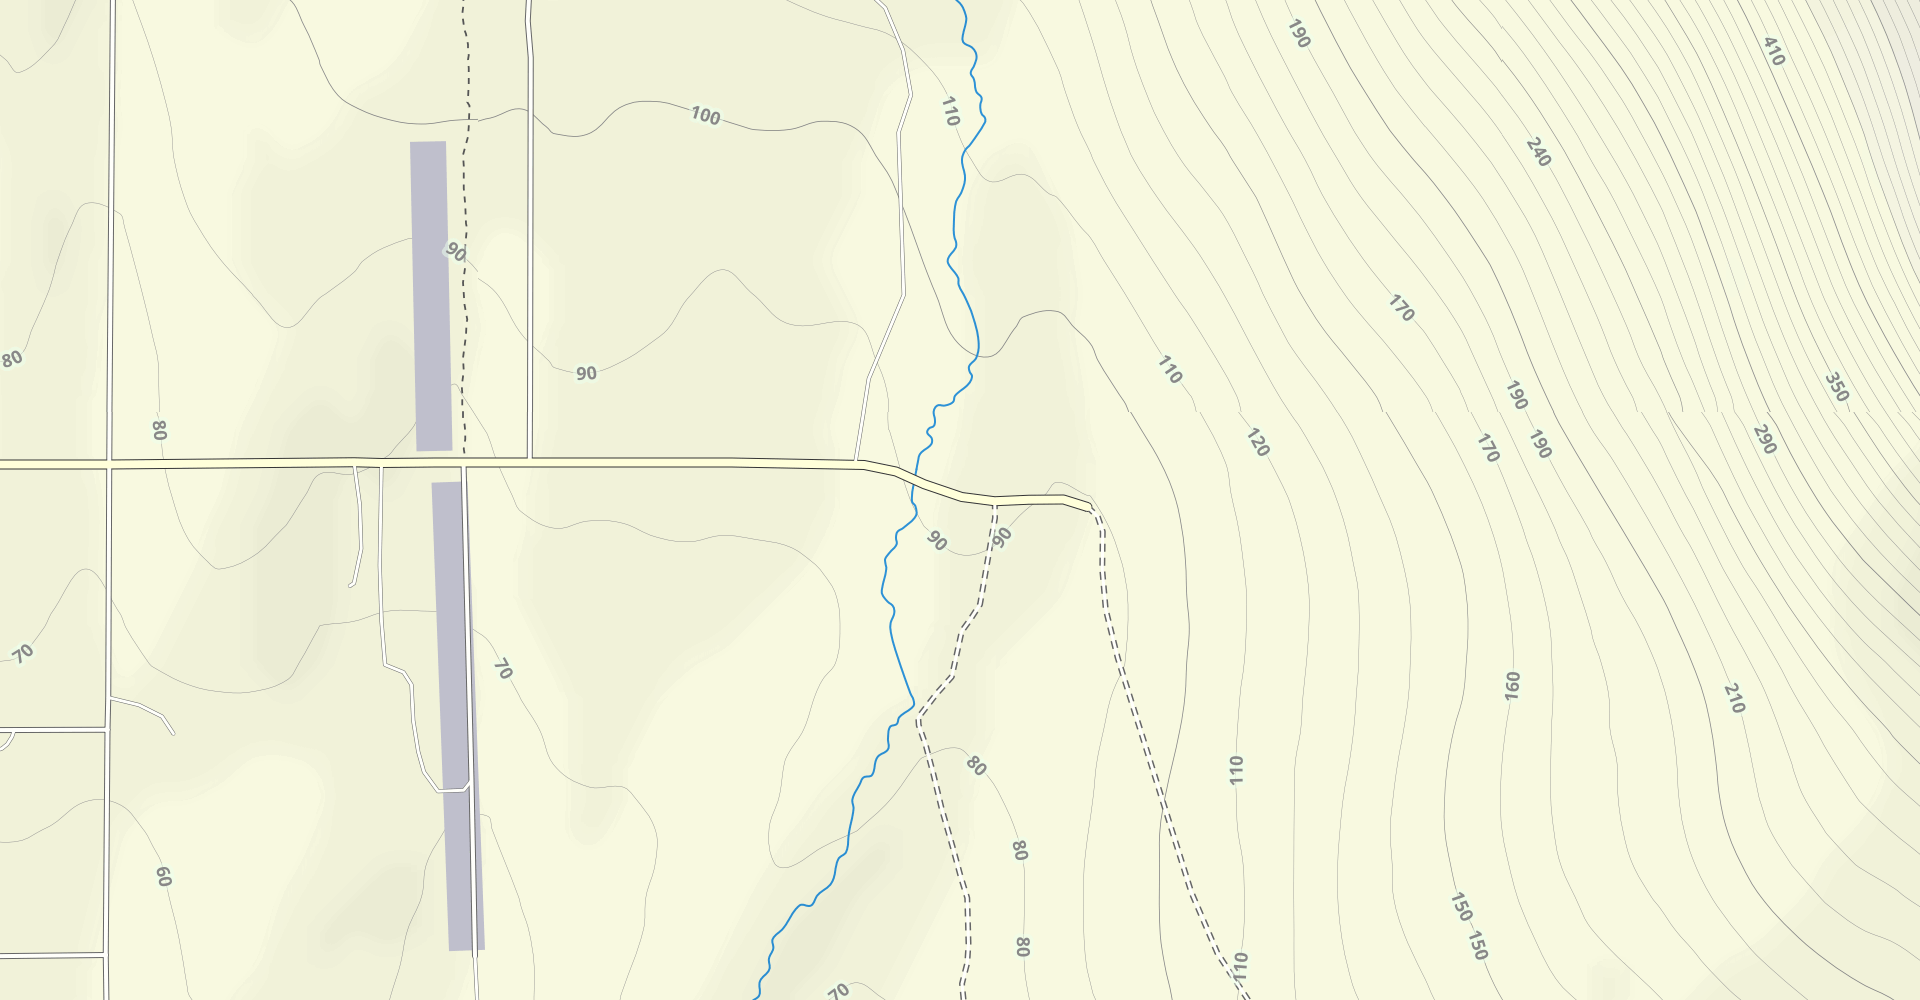 Plumley-Maud Trail